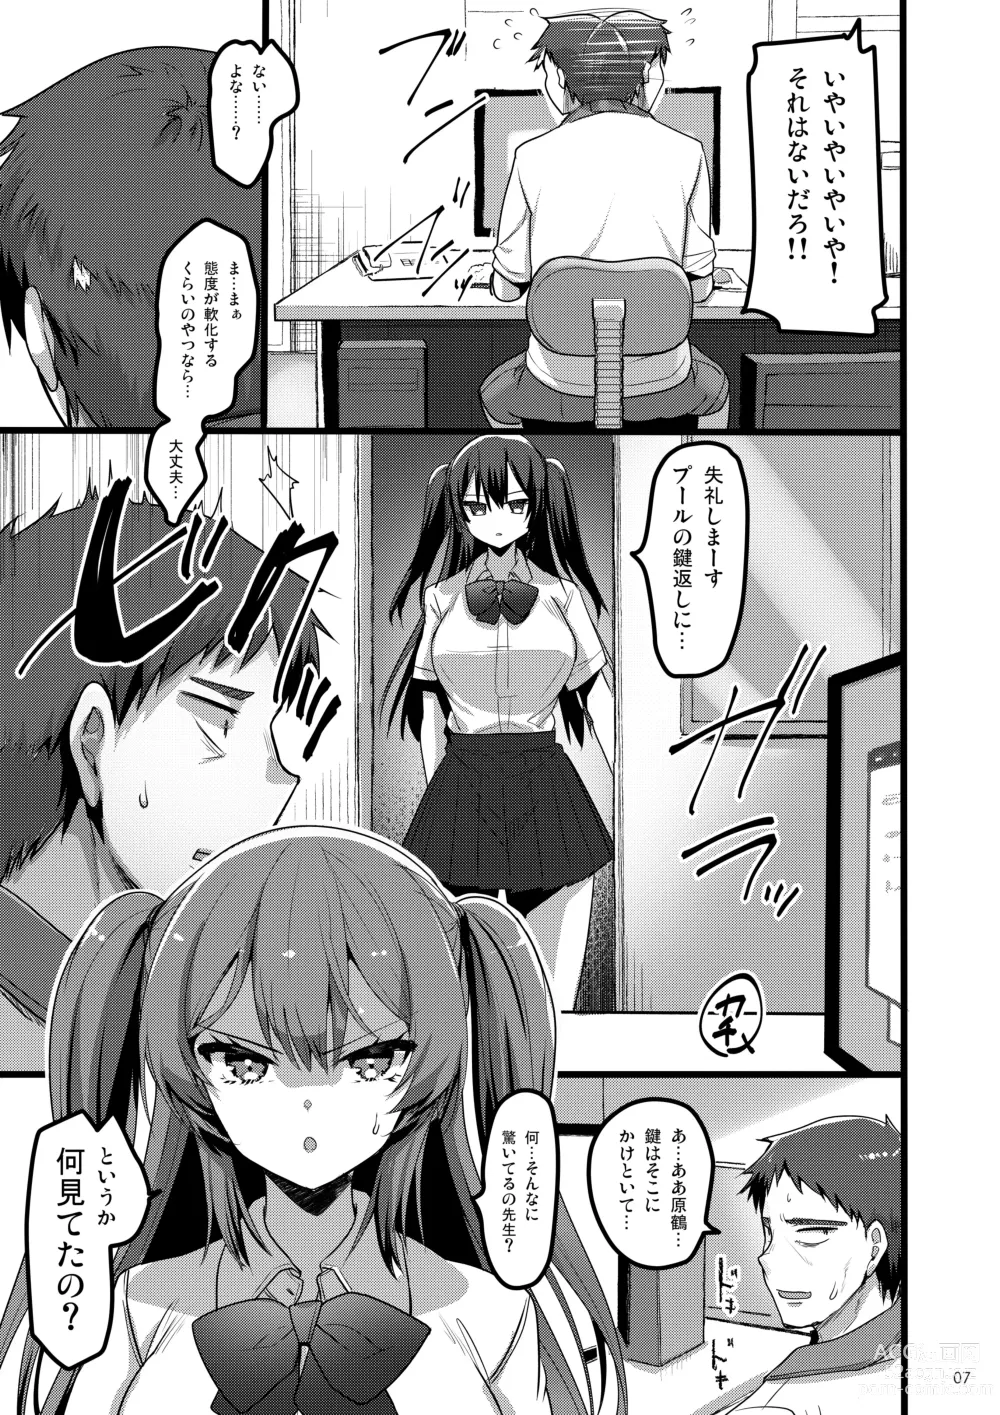 Page 6 of doujinshi 自分にだけ当たりが強い生徒に催●術を掛けた話